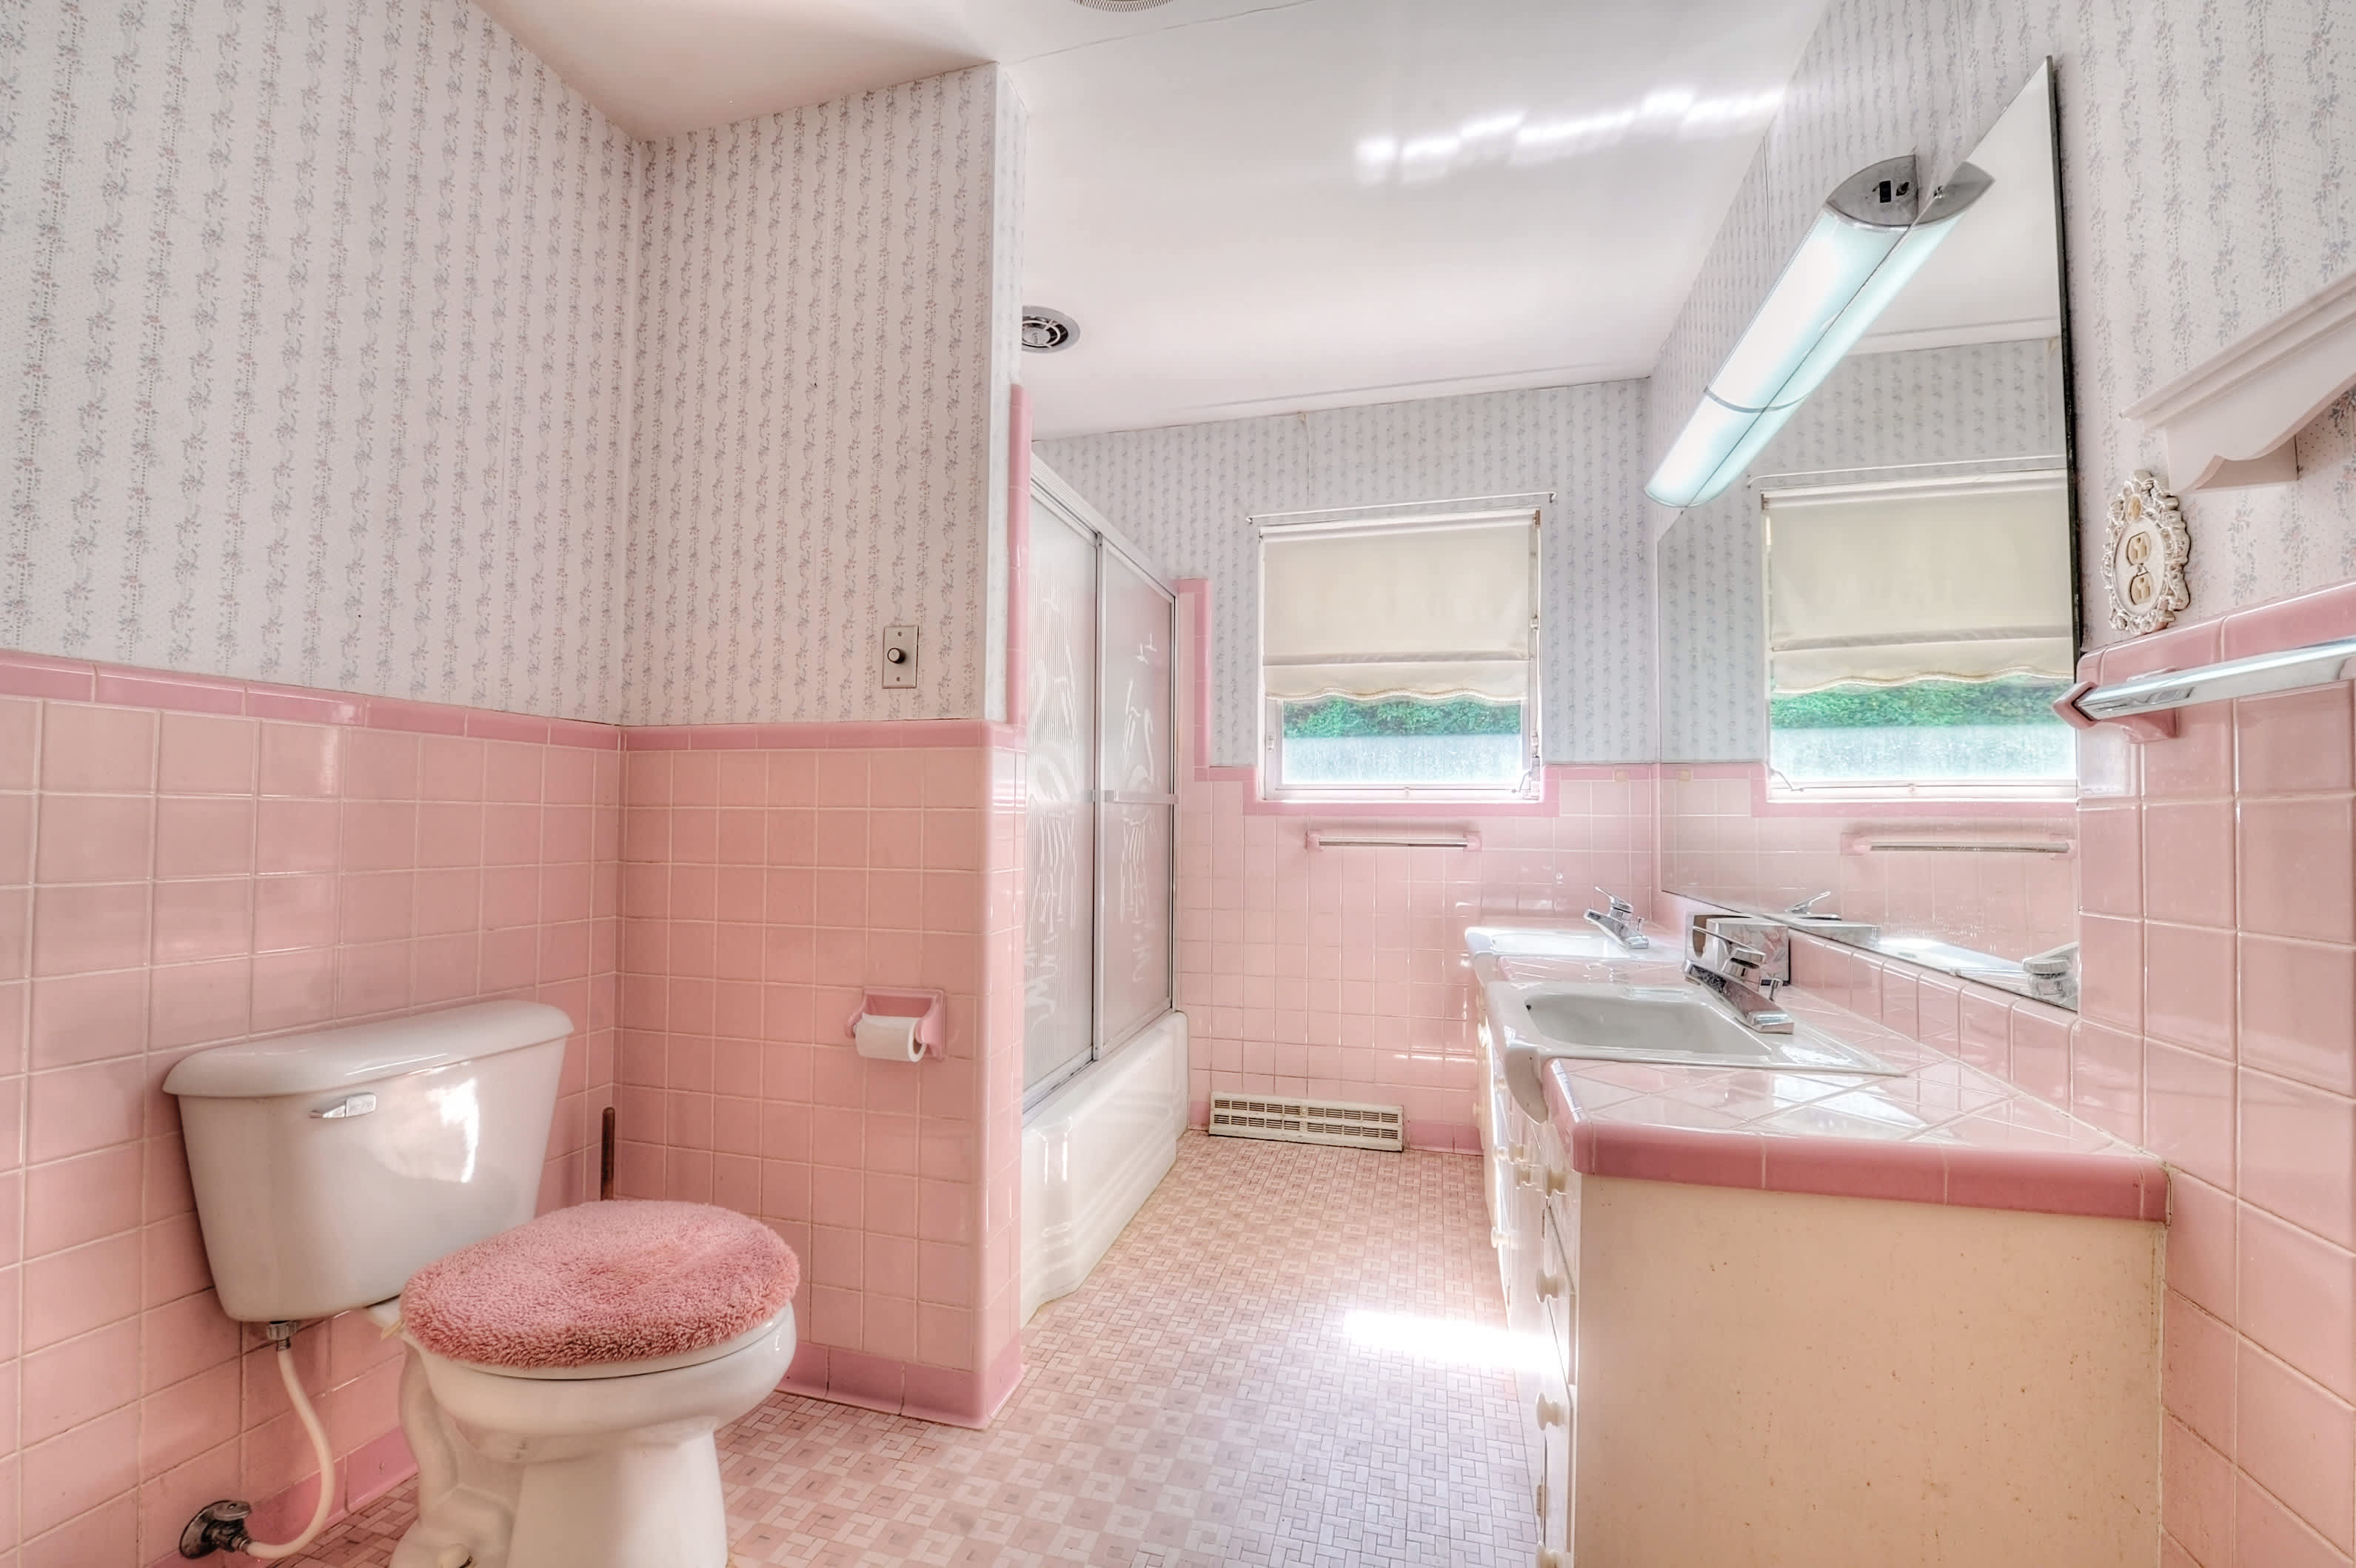 https://cdn.apartmenttherapy.info/image/upload/v1612885888/at/real-estate/pink-vintage-retro-bathroom.jpg